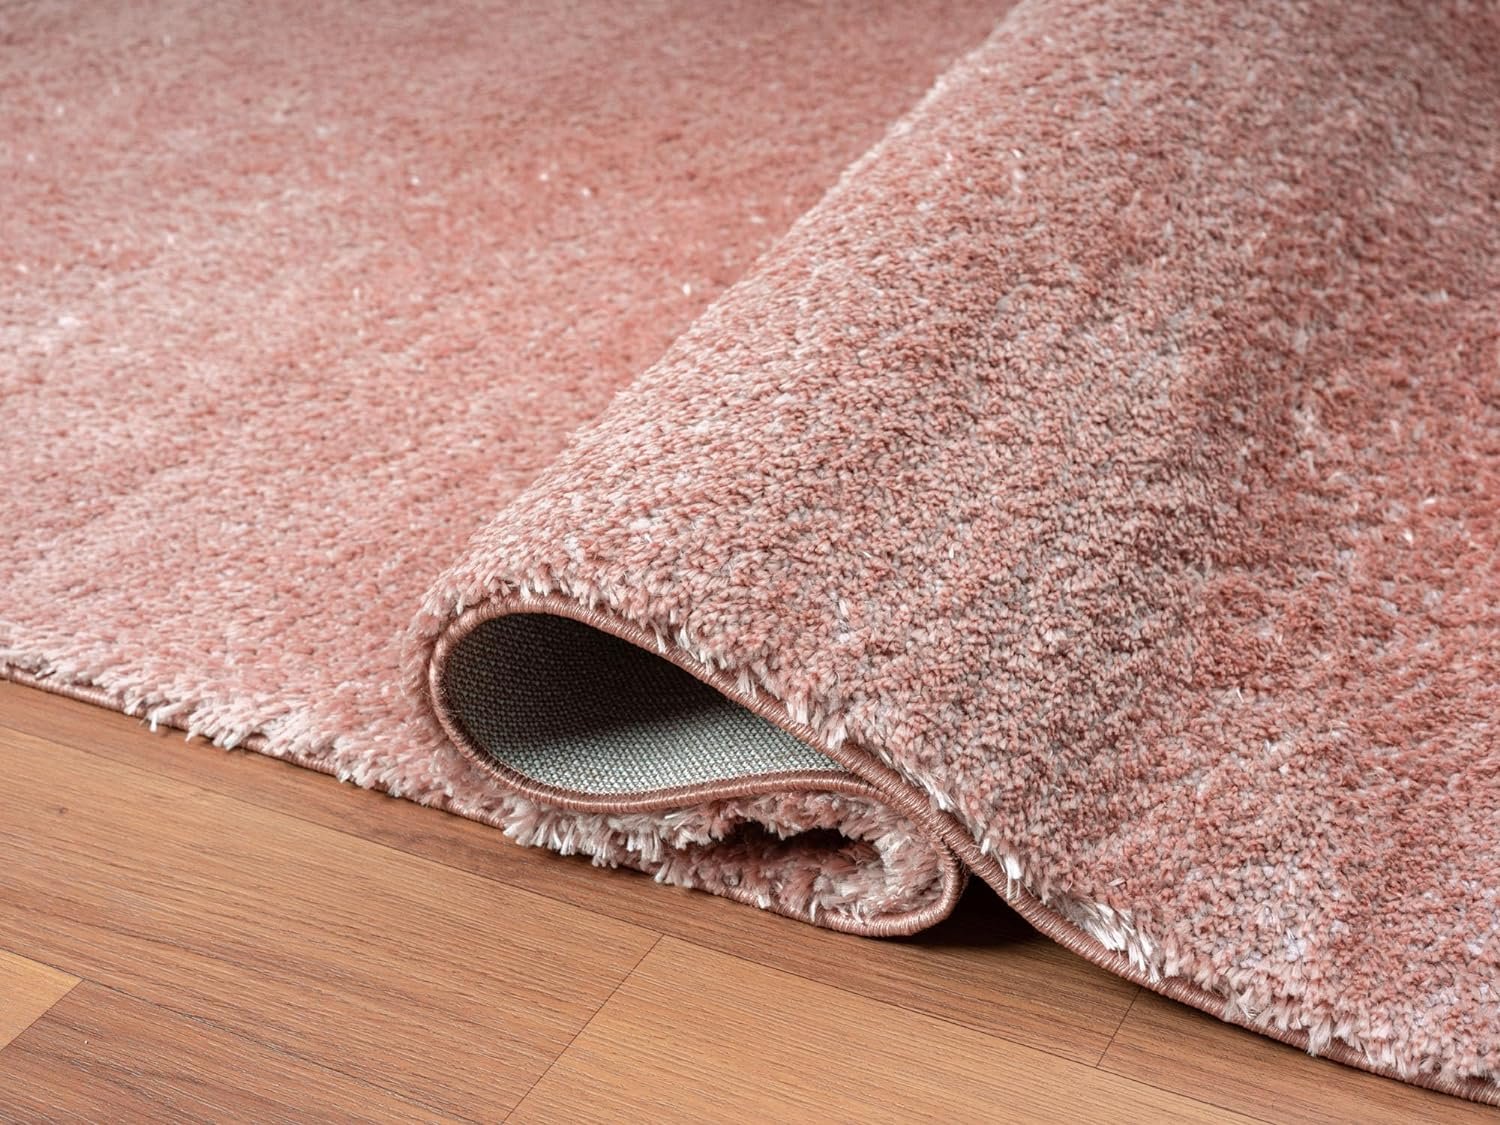 HR Plush Solid Color Shag Rug - Thick Pile, High-End, Soft & Cozy Floor Carpet for Bedroom & Living Room #26227